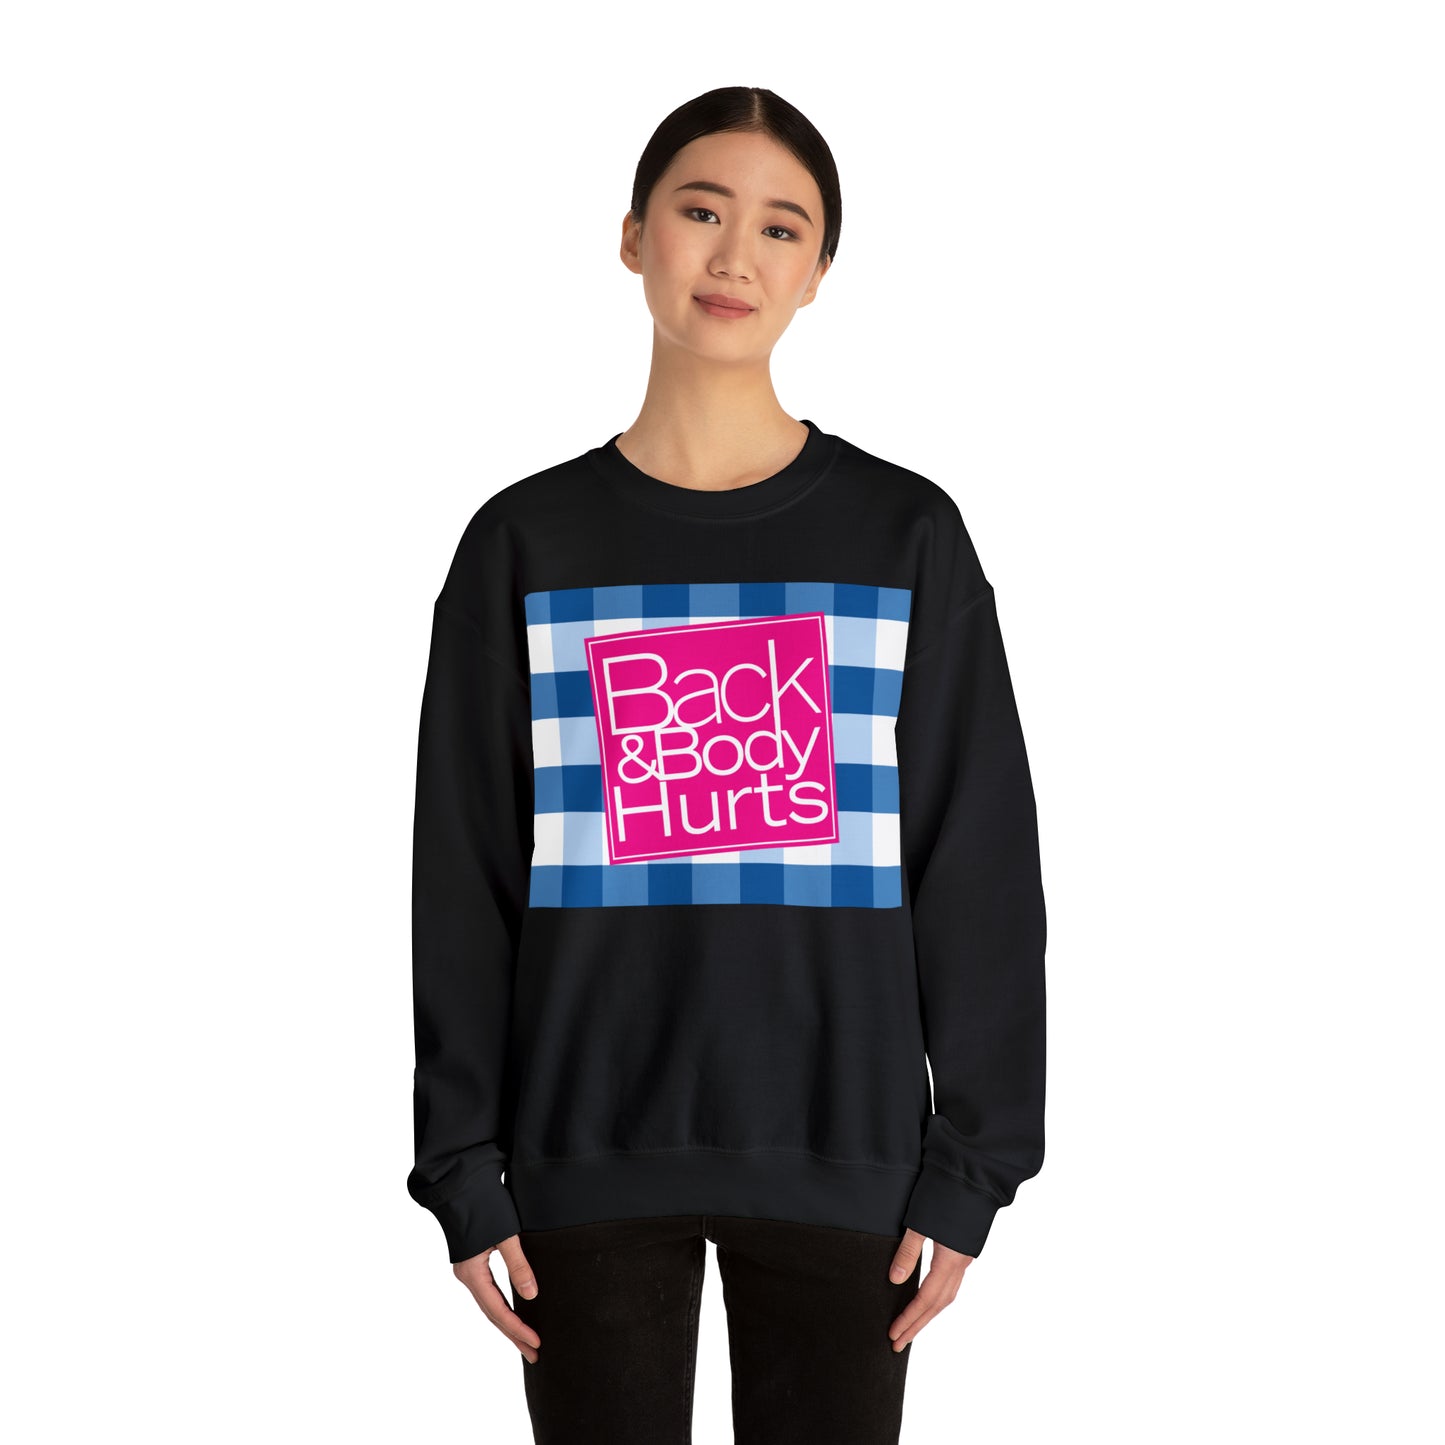 Back and Body Hurts Sweatshirt,  Sweatshirt, Unisex Heavy Blend Sweater, Gift for mom, Christmas gift